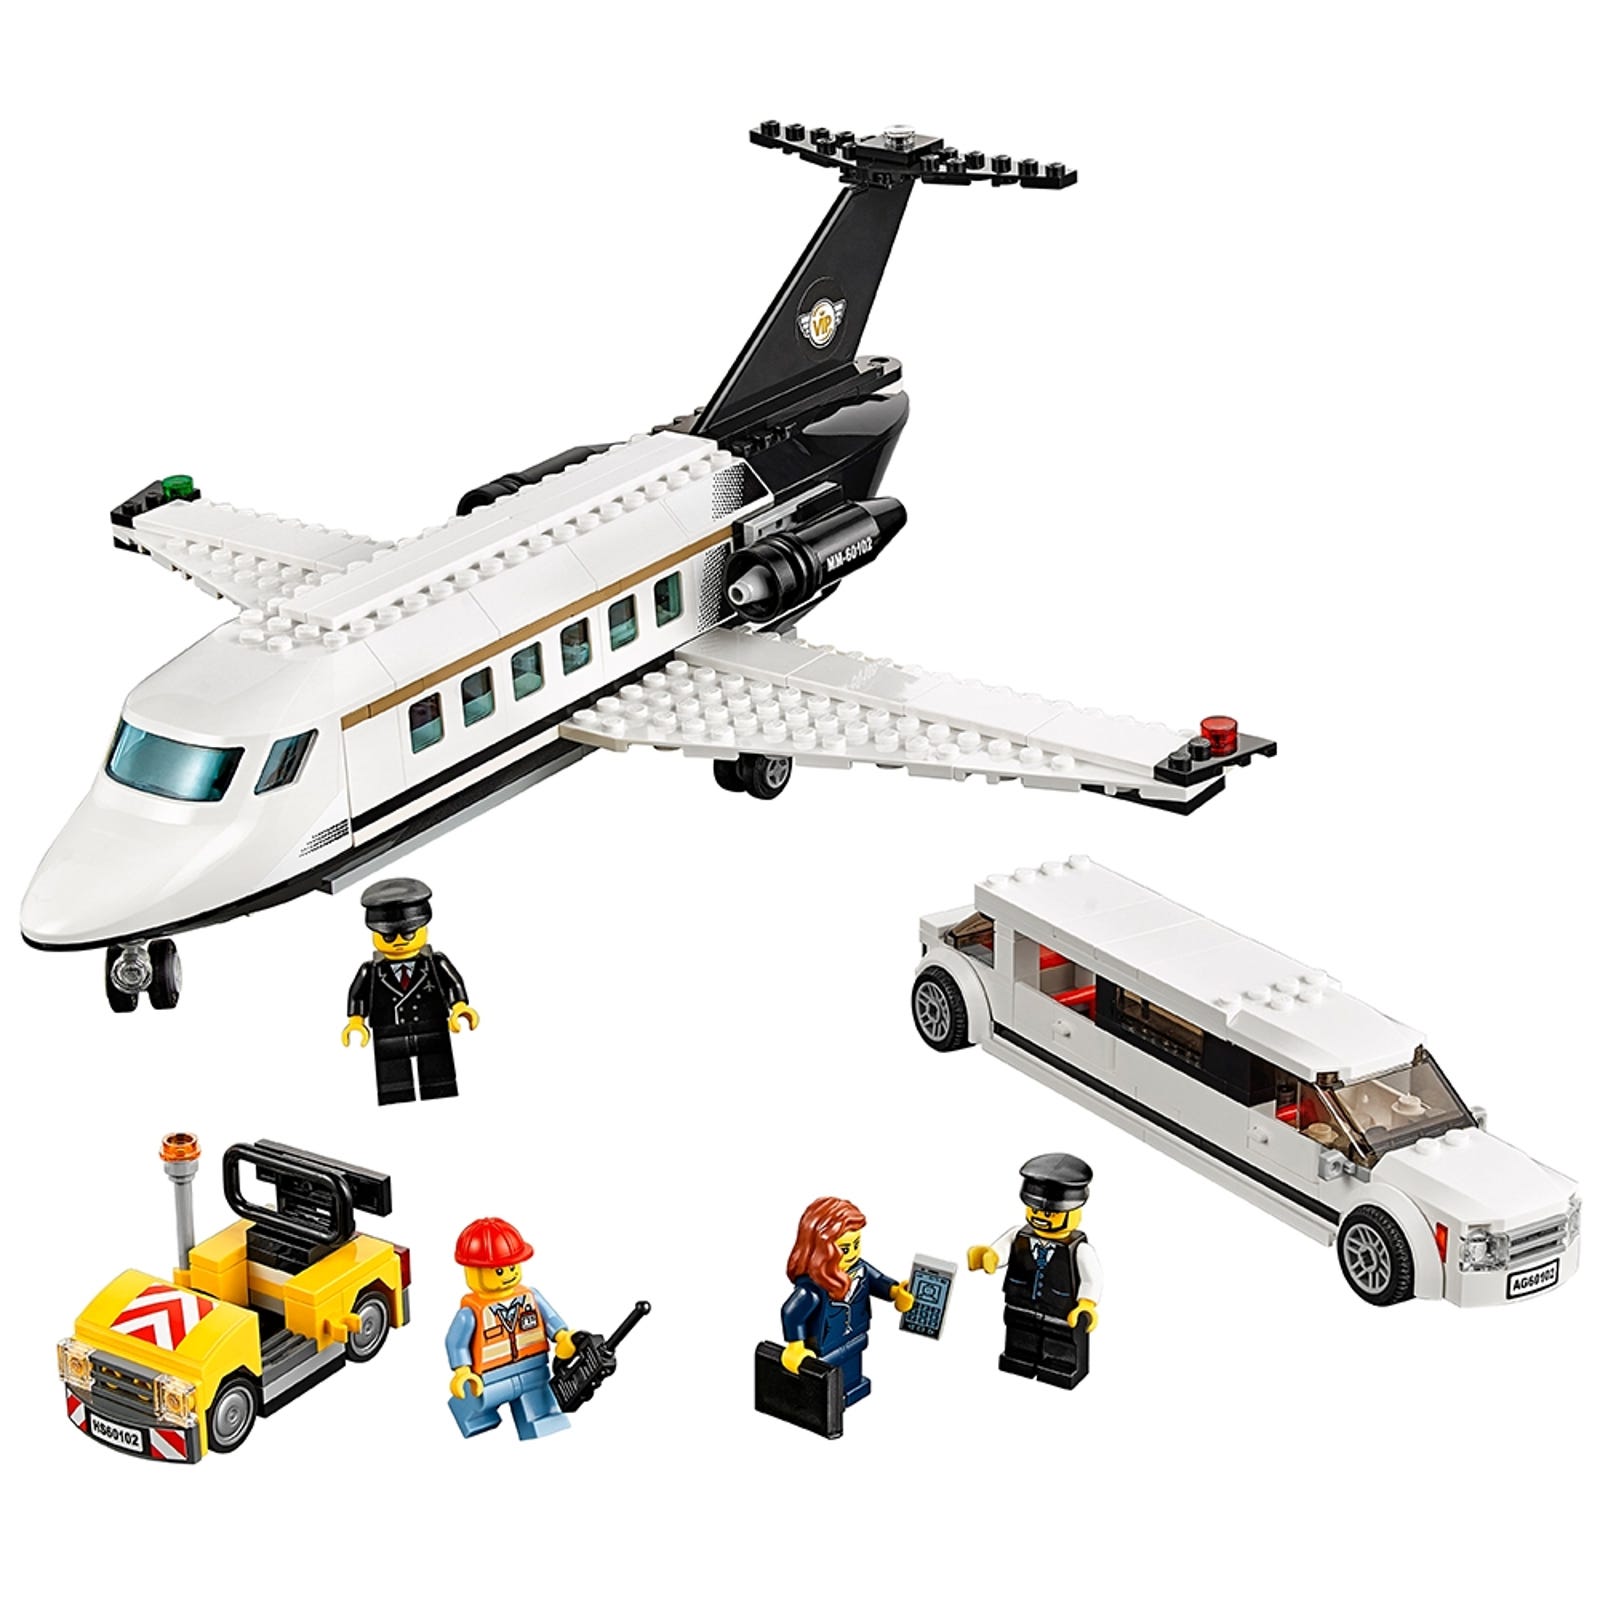 60102 Airport VIP Service   Brickipedia   Fandom